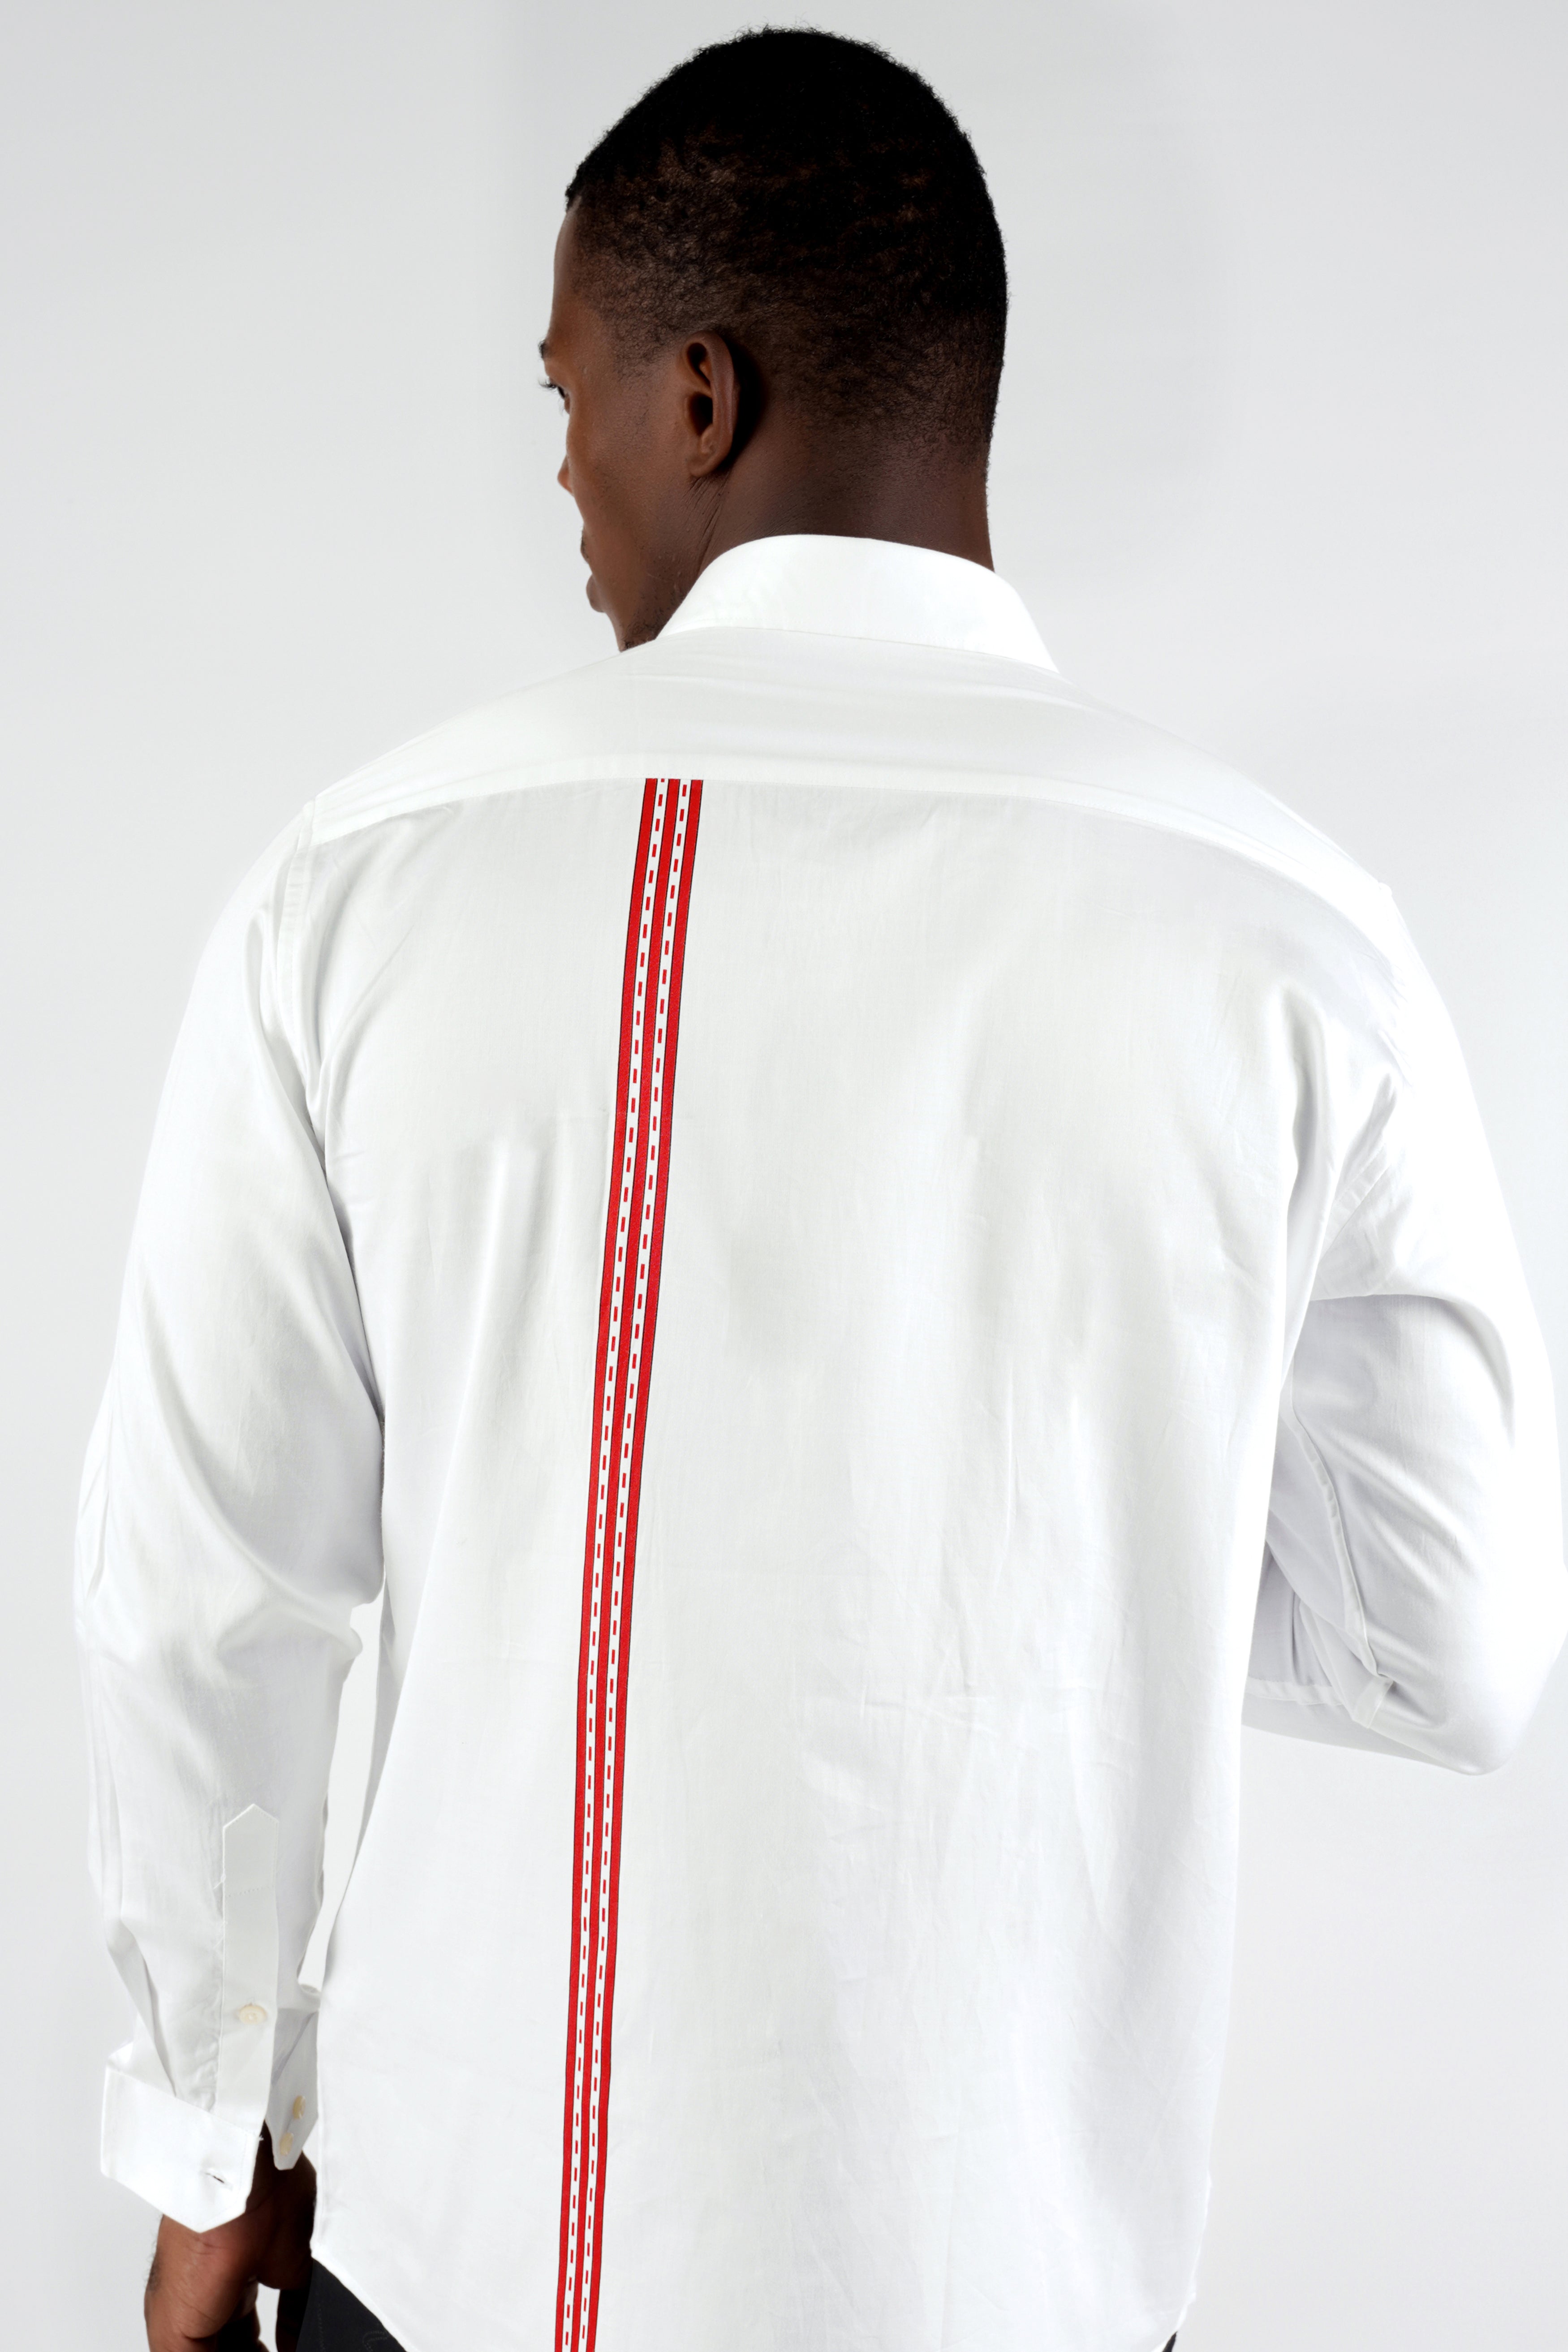 Bright White with Thunderbird Red Printed Super Soft Premium Cotton Shirt